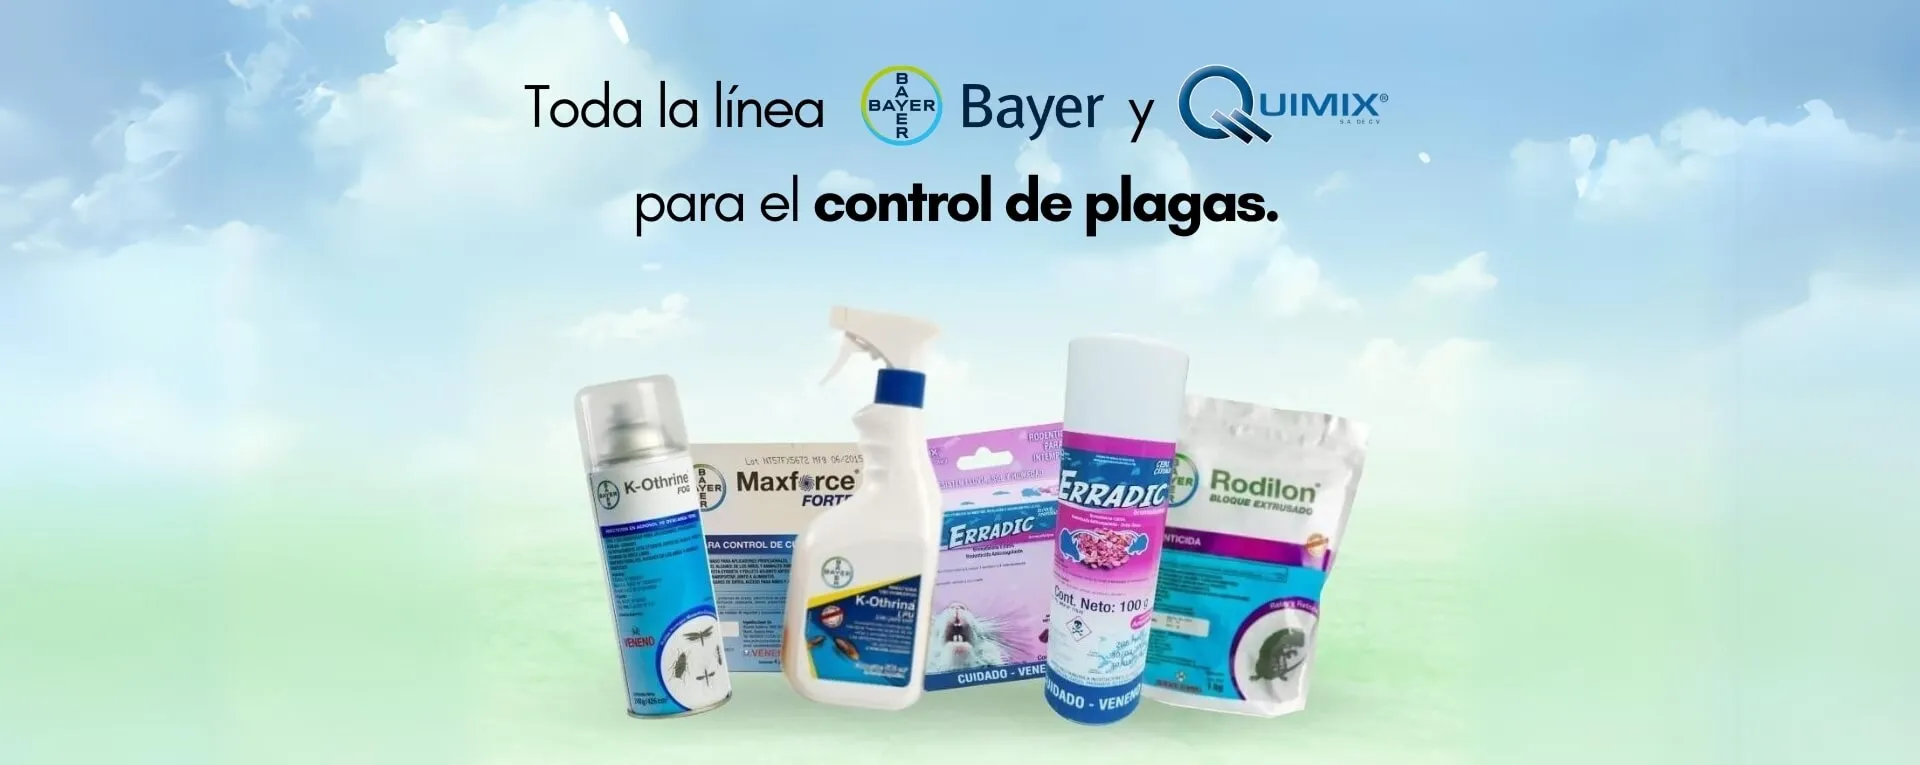 Bayer quimix